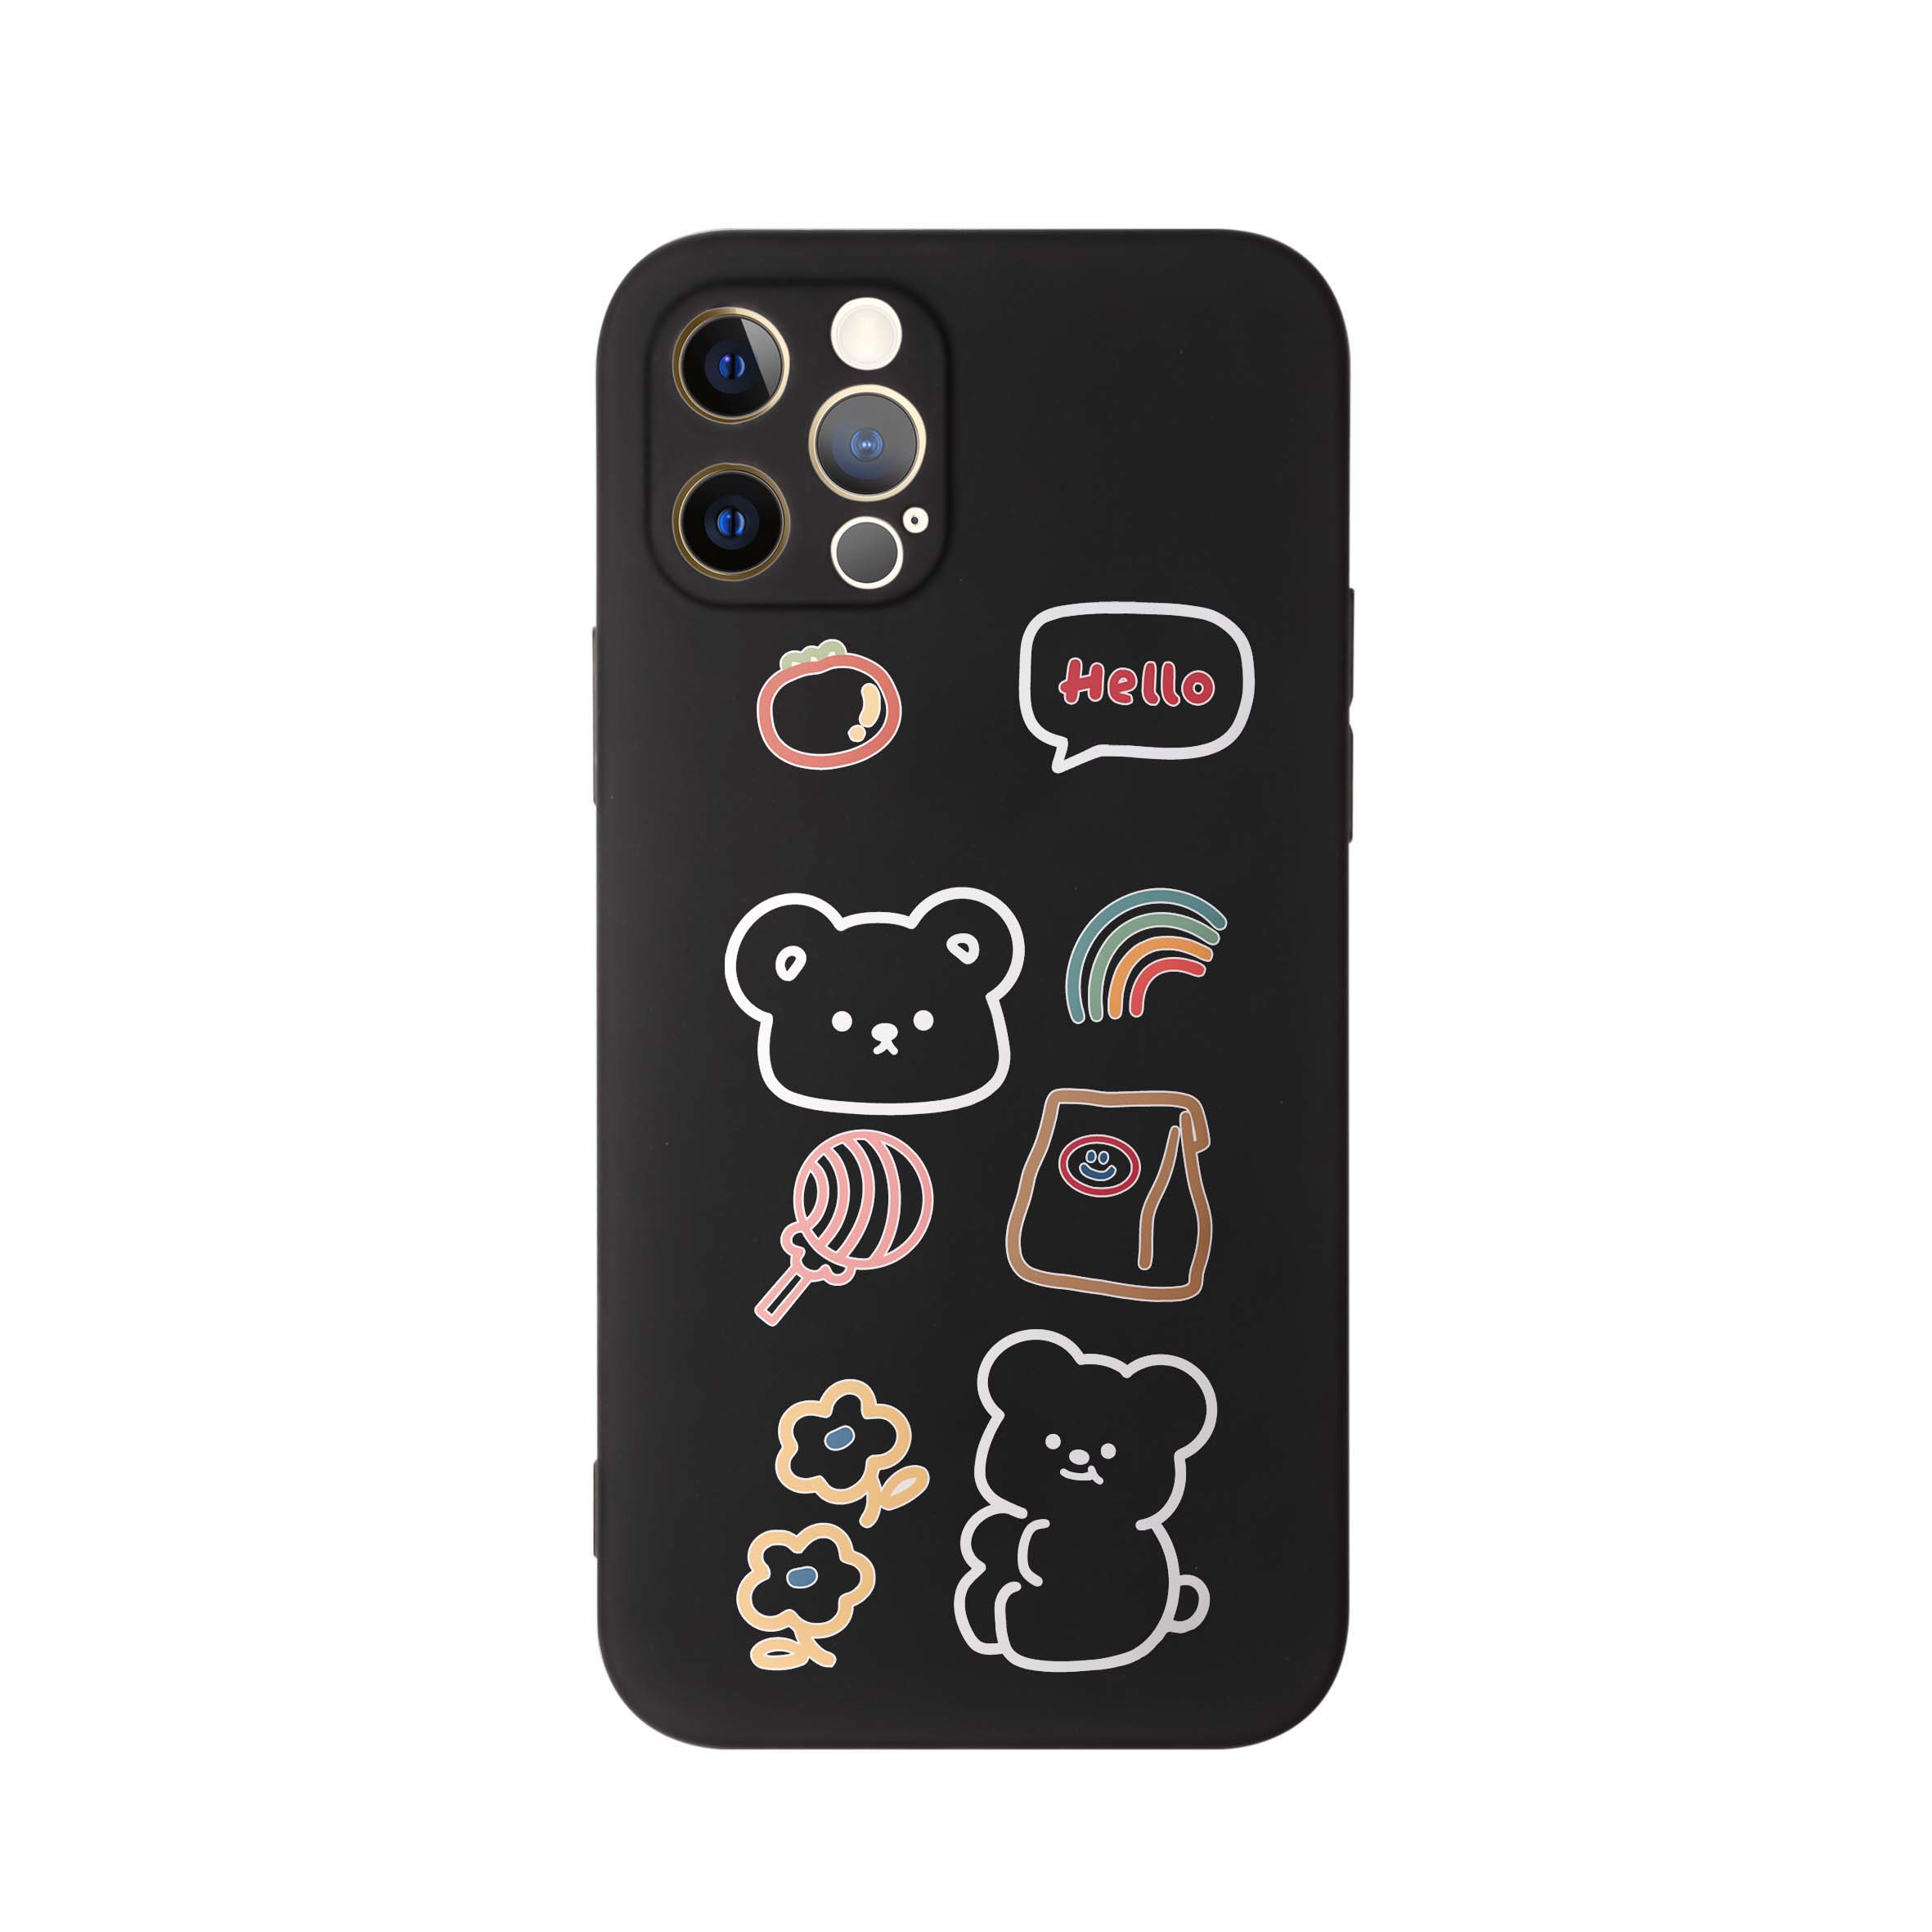 کاور طرح خرس کیوت کد m4371 مناسب برای گوشی موبایل اپل iphone 11 Promax